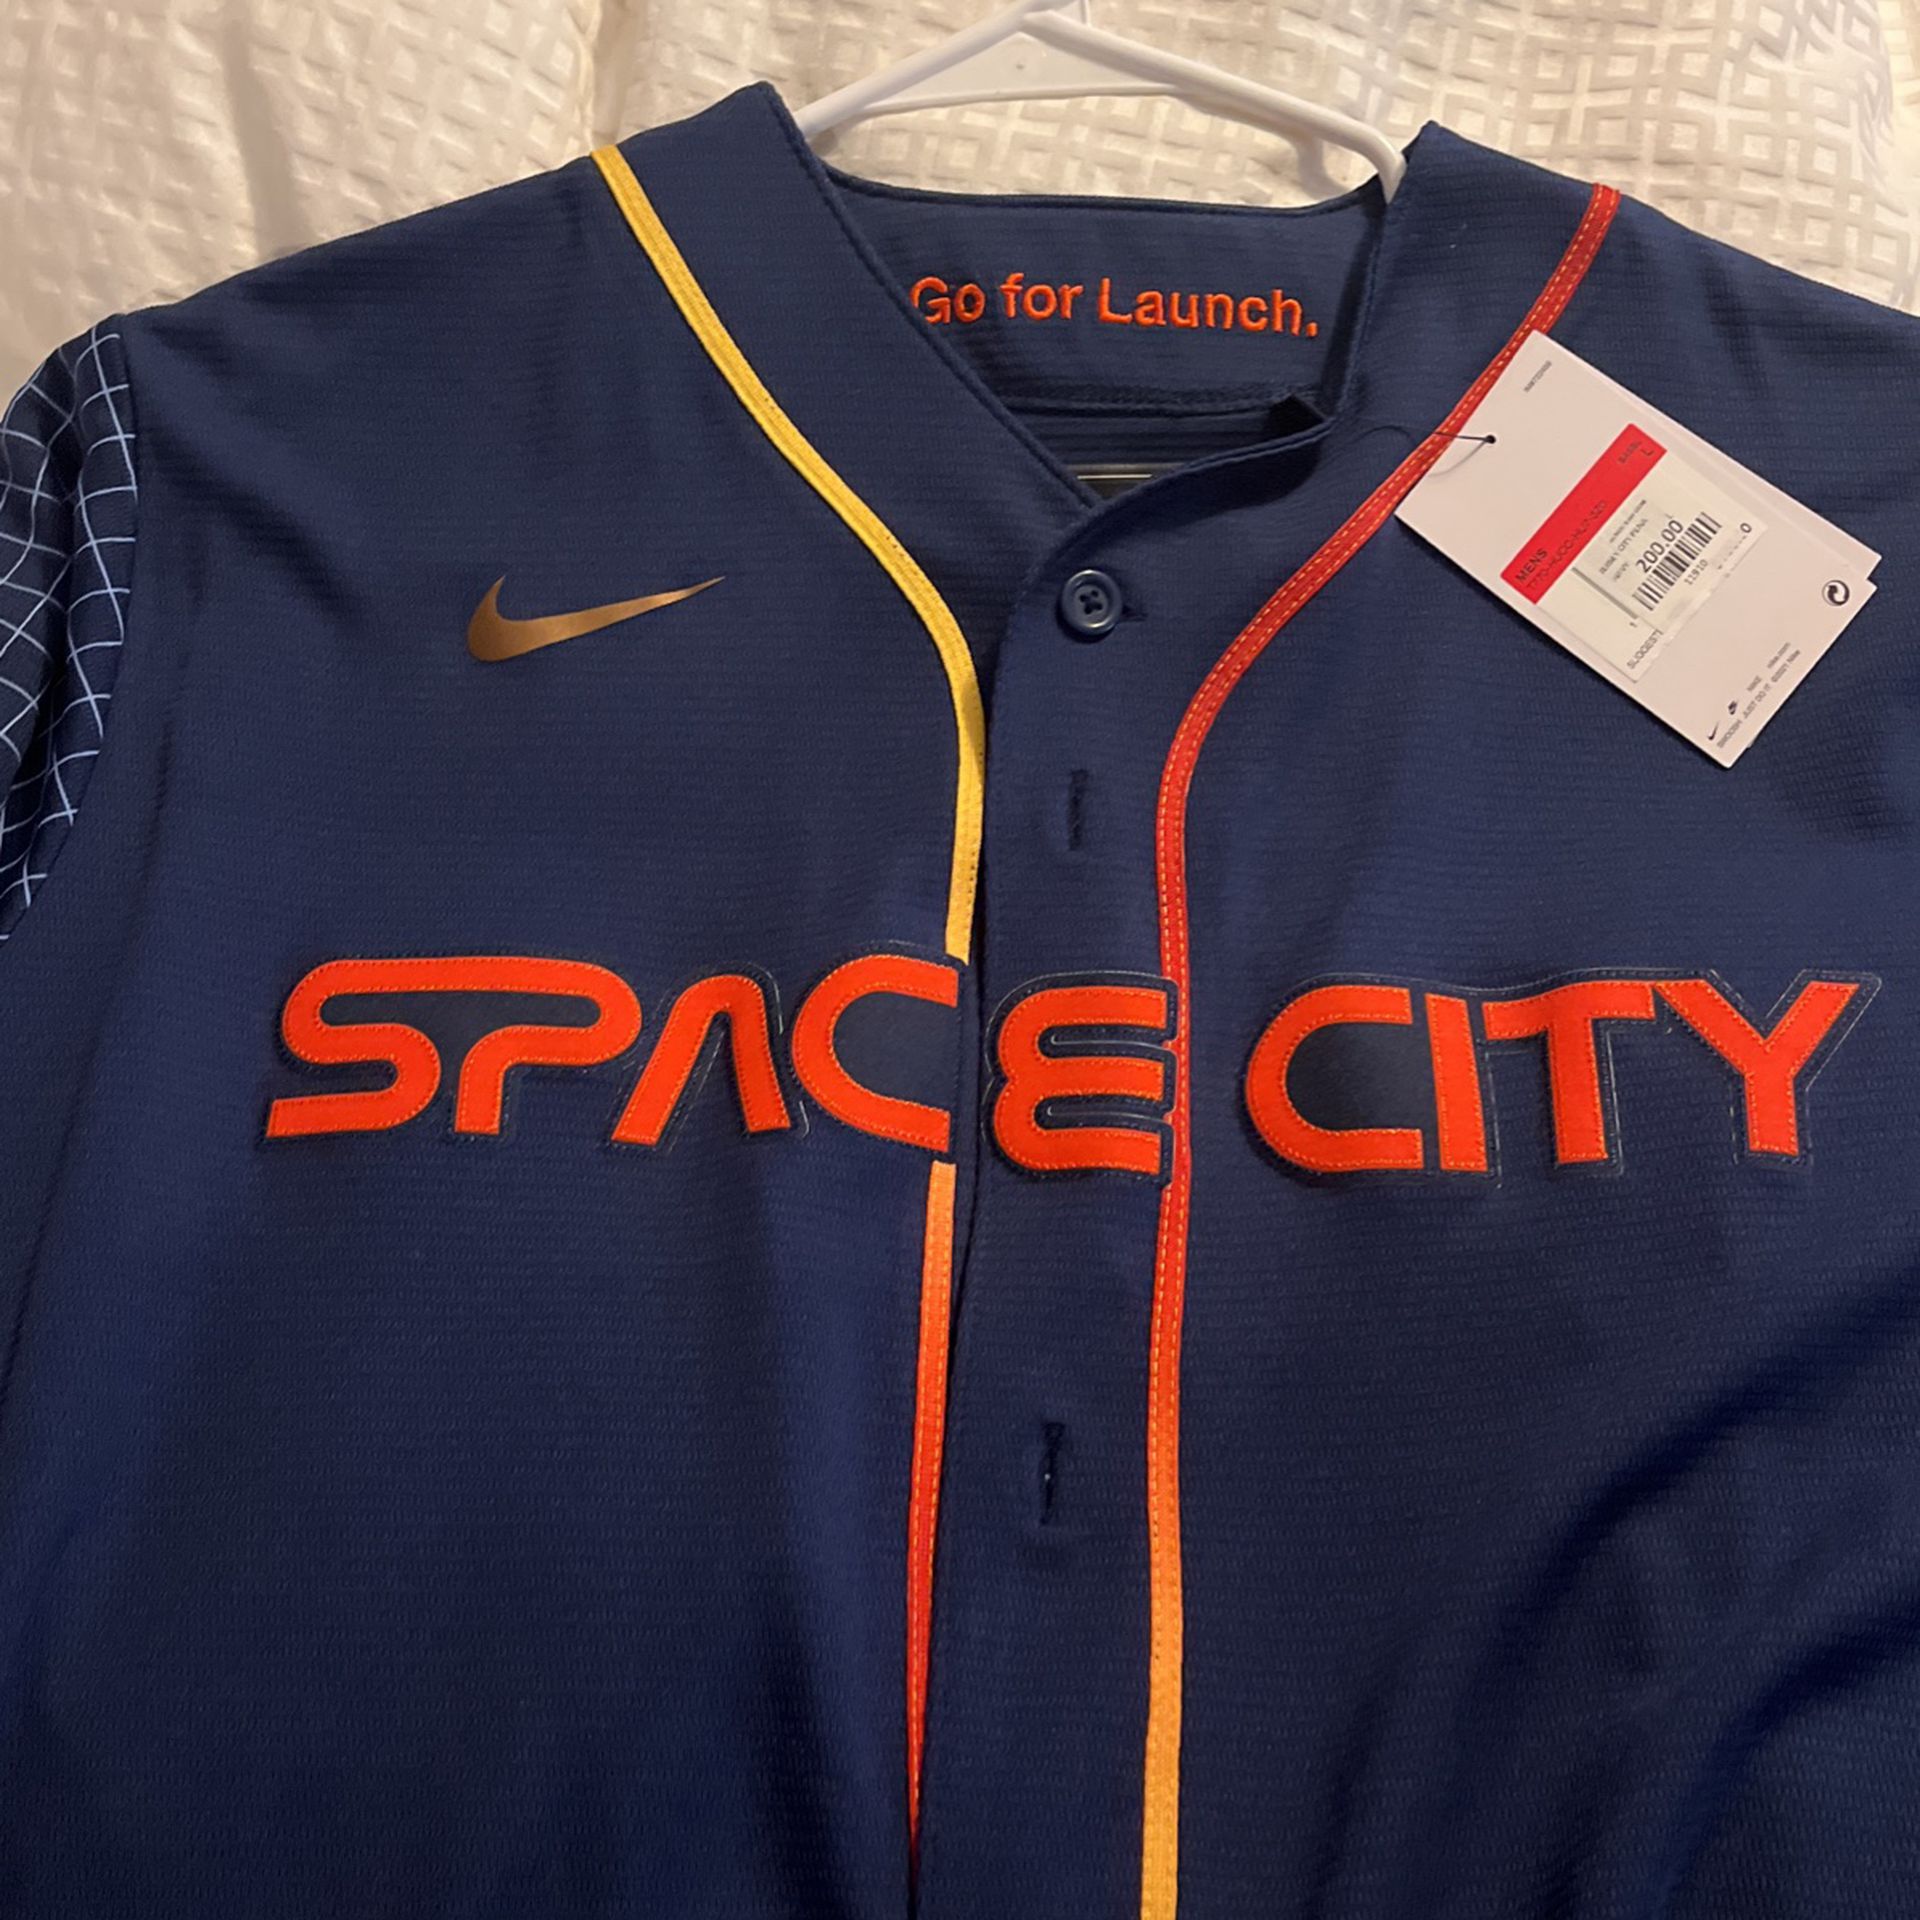 space city shirt jersey